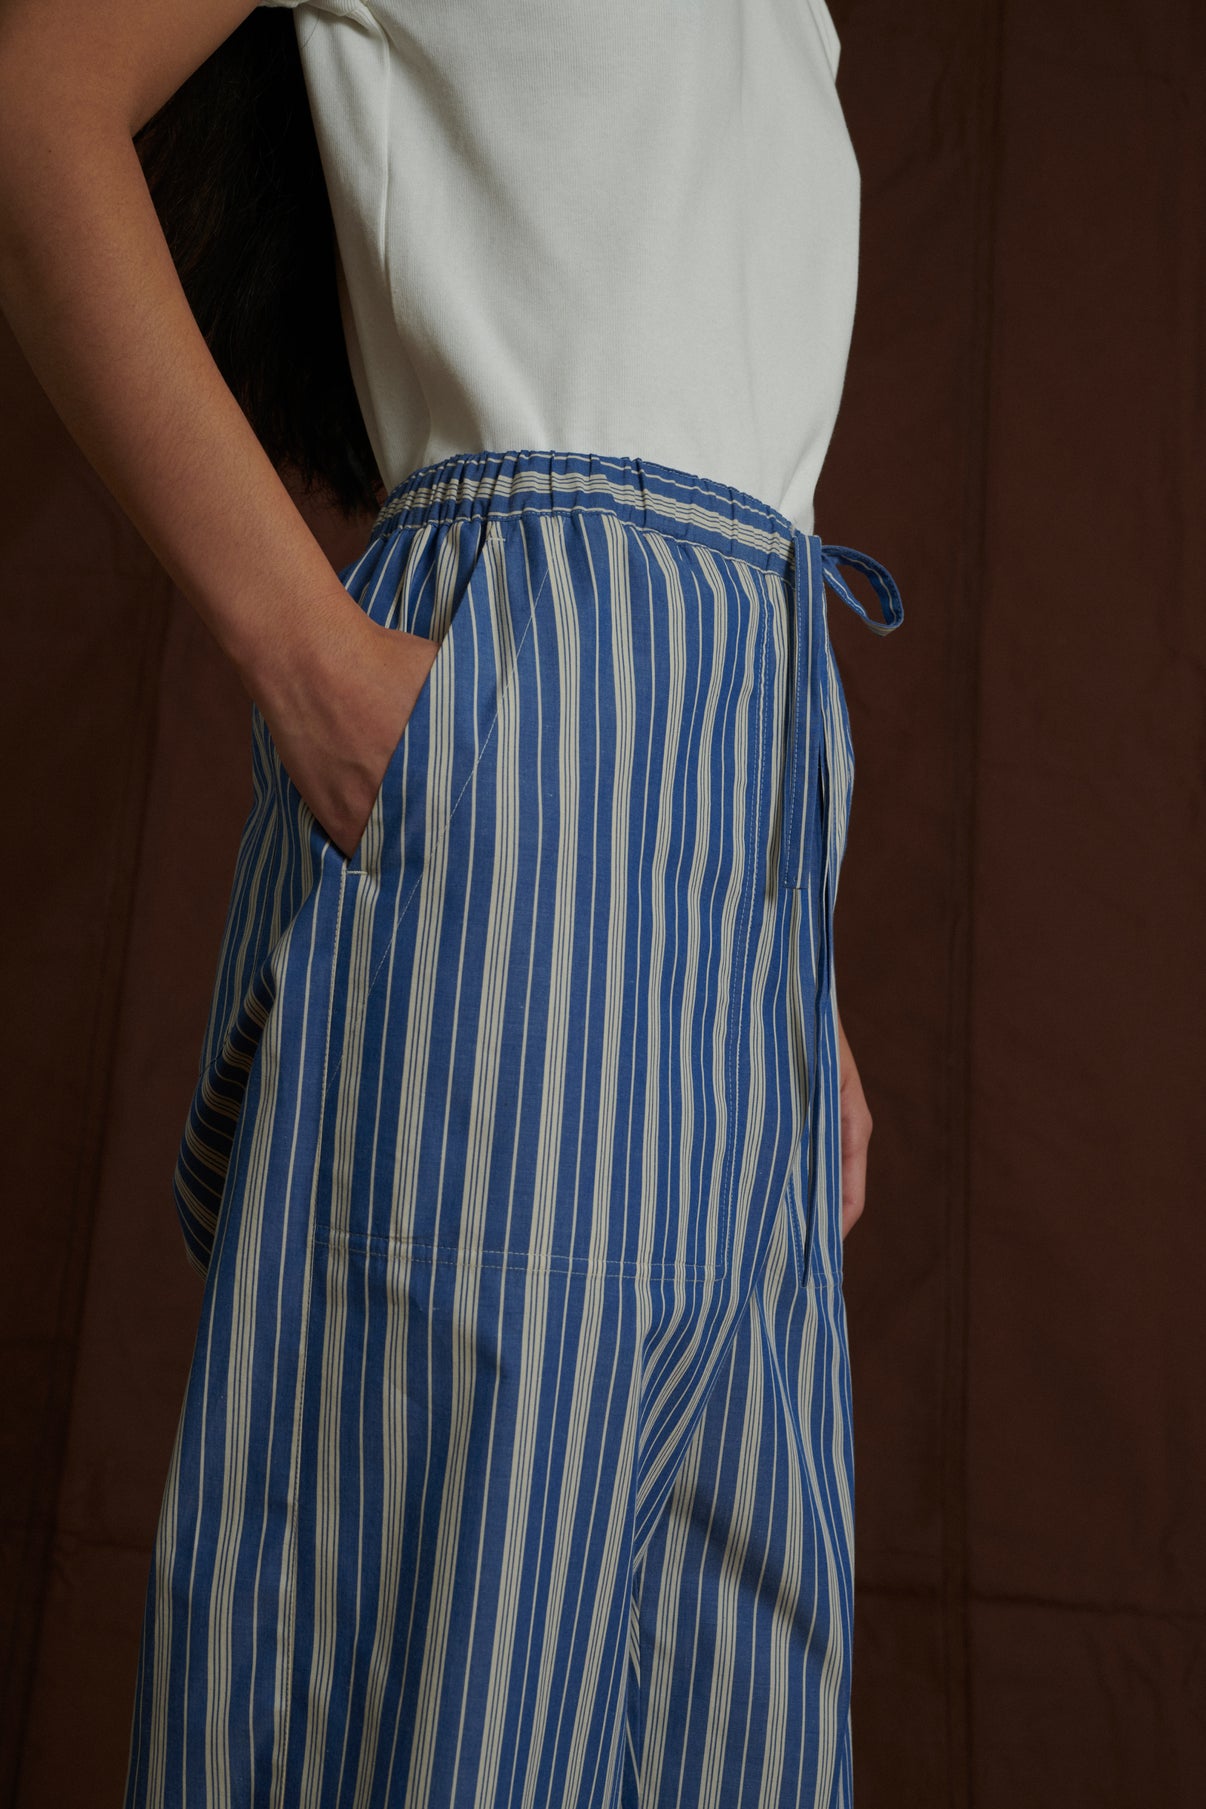 Pantalon Albert - Bleu/Blanc - Coton - Femme vue 3